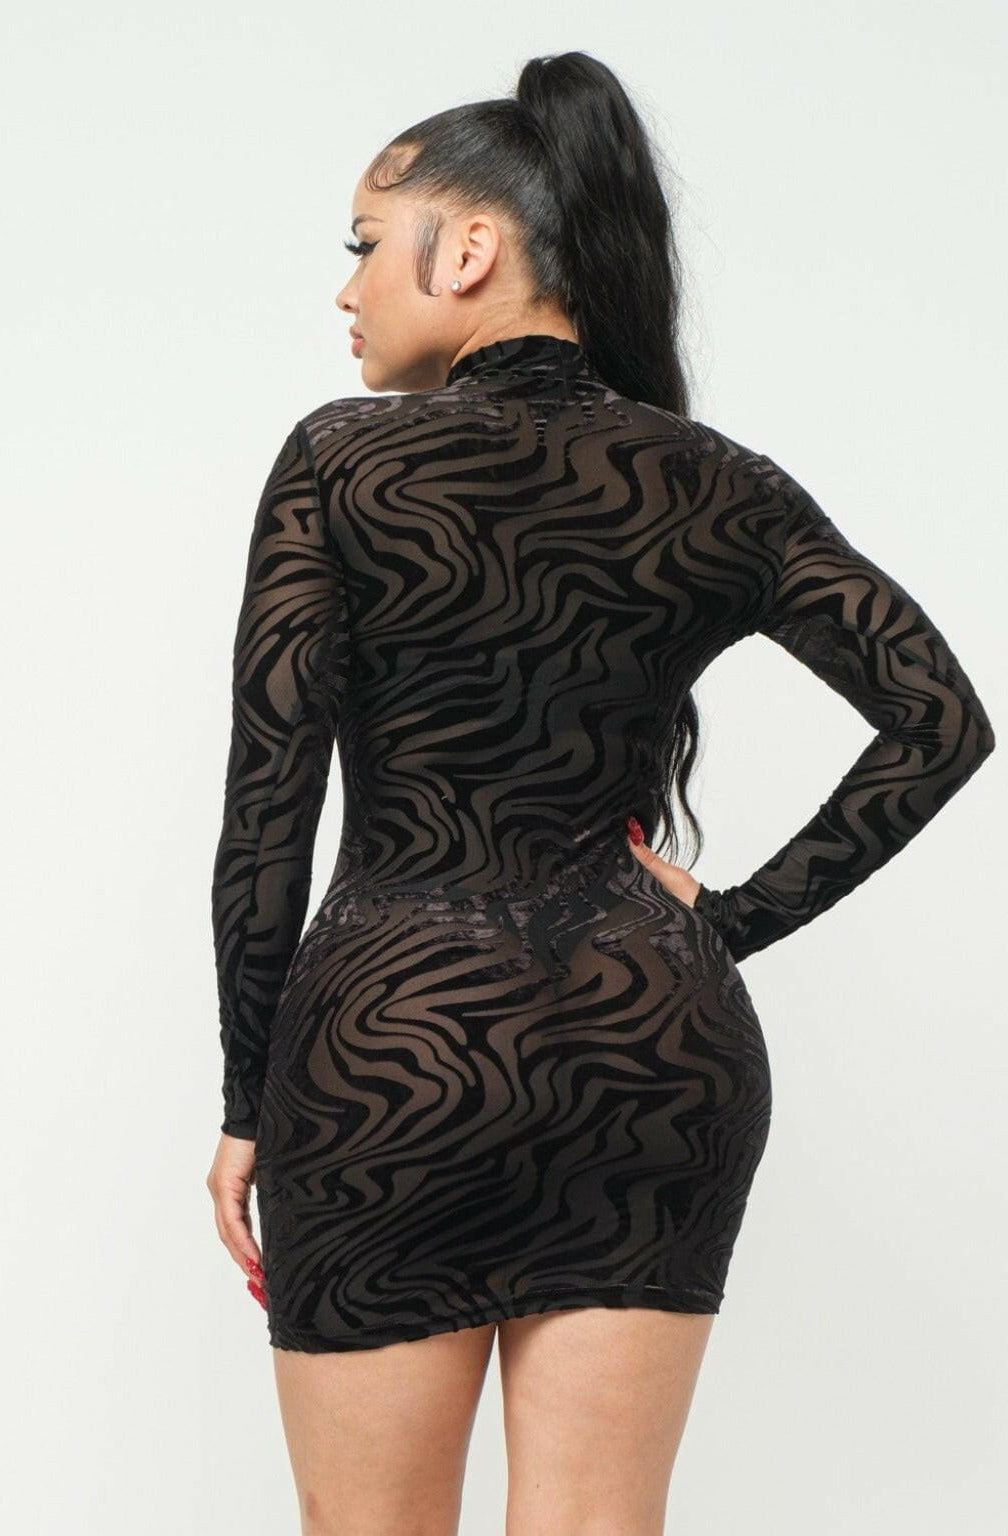 Epicplacess Dress L / Black Raelynn Mesh Mini Dress - Black 23144-BLACK-3